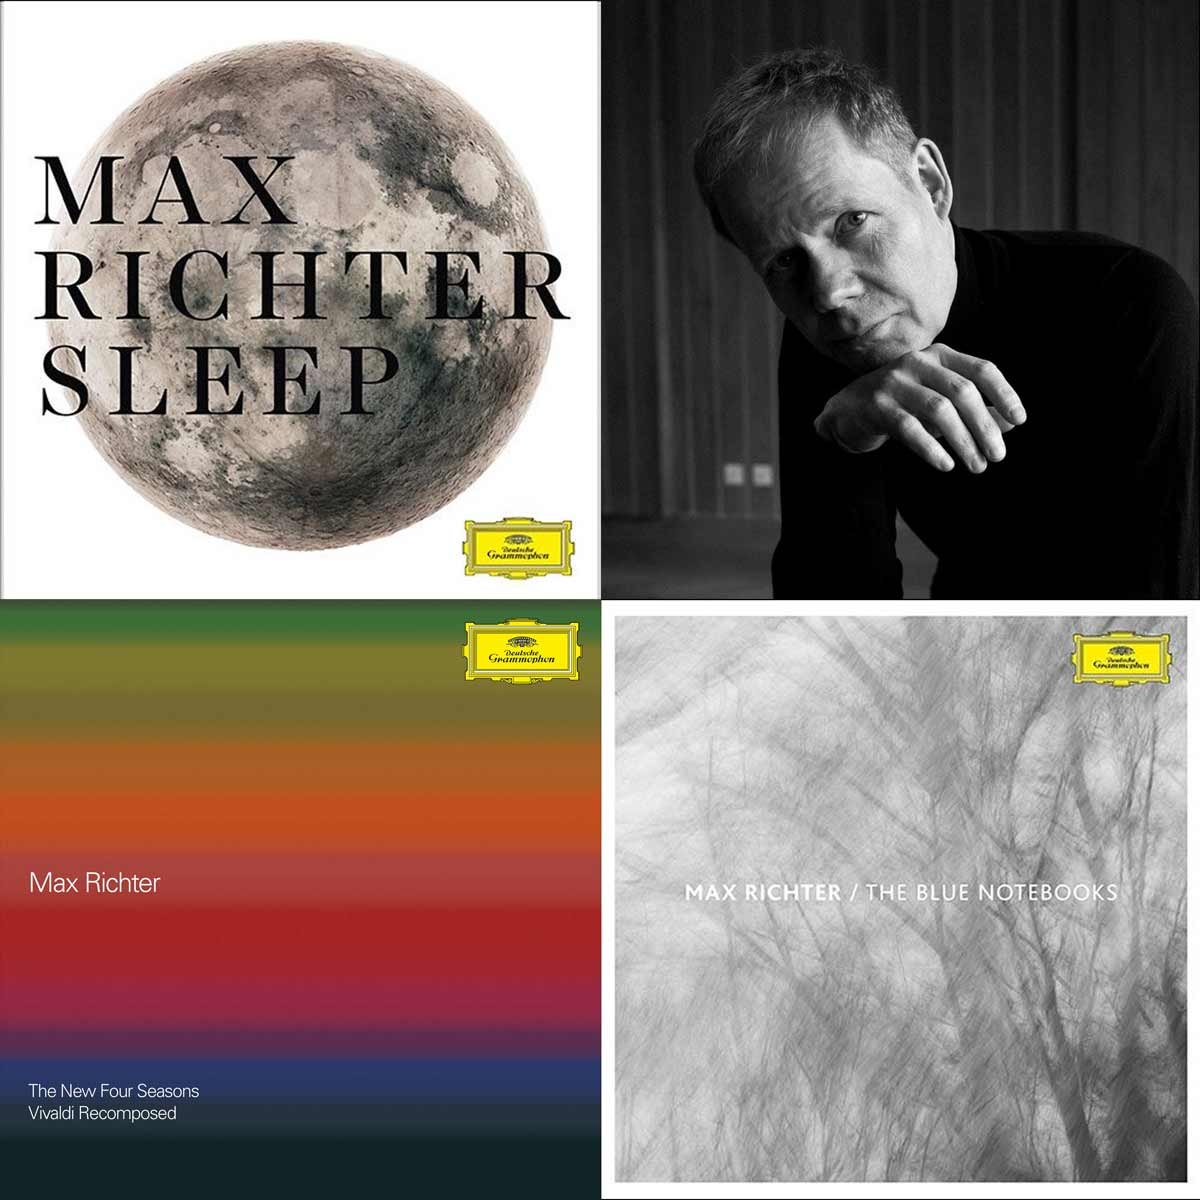 Interview: Max Richter on His Sleep-Inspired Album